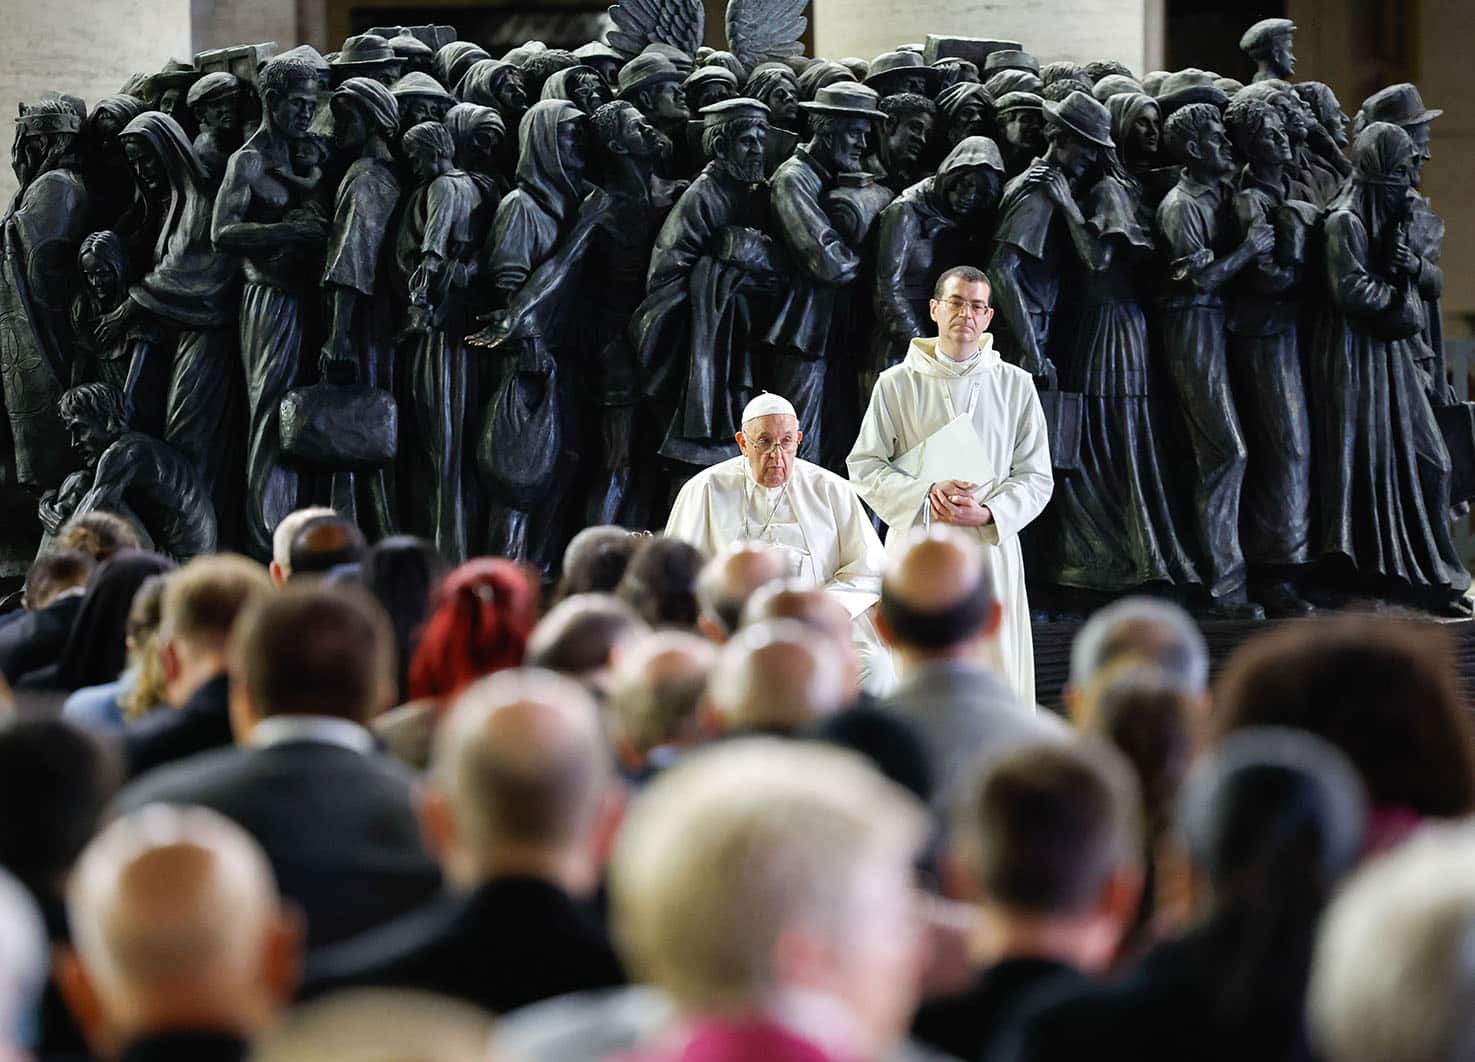 POPE FRANCIS MIGRANTS PRAYER